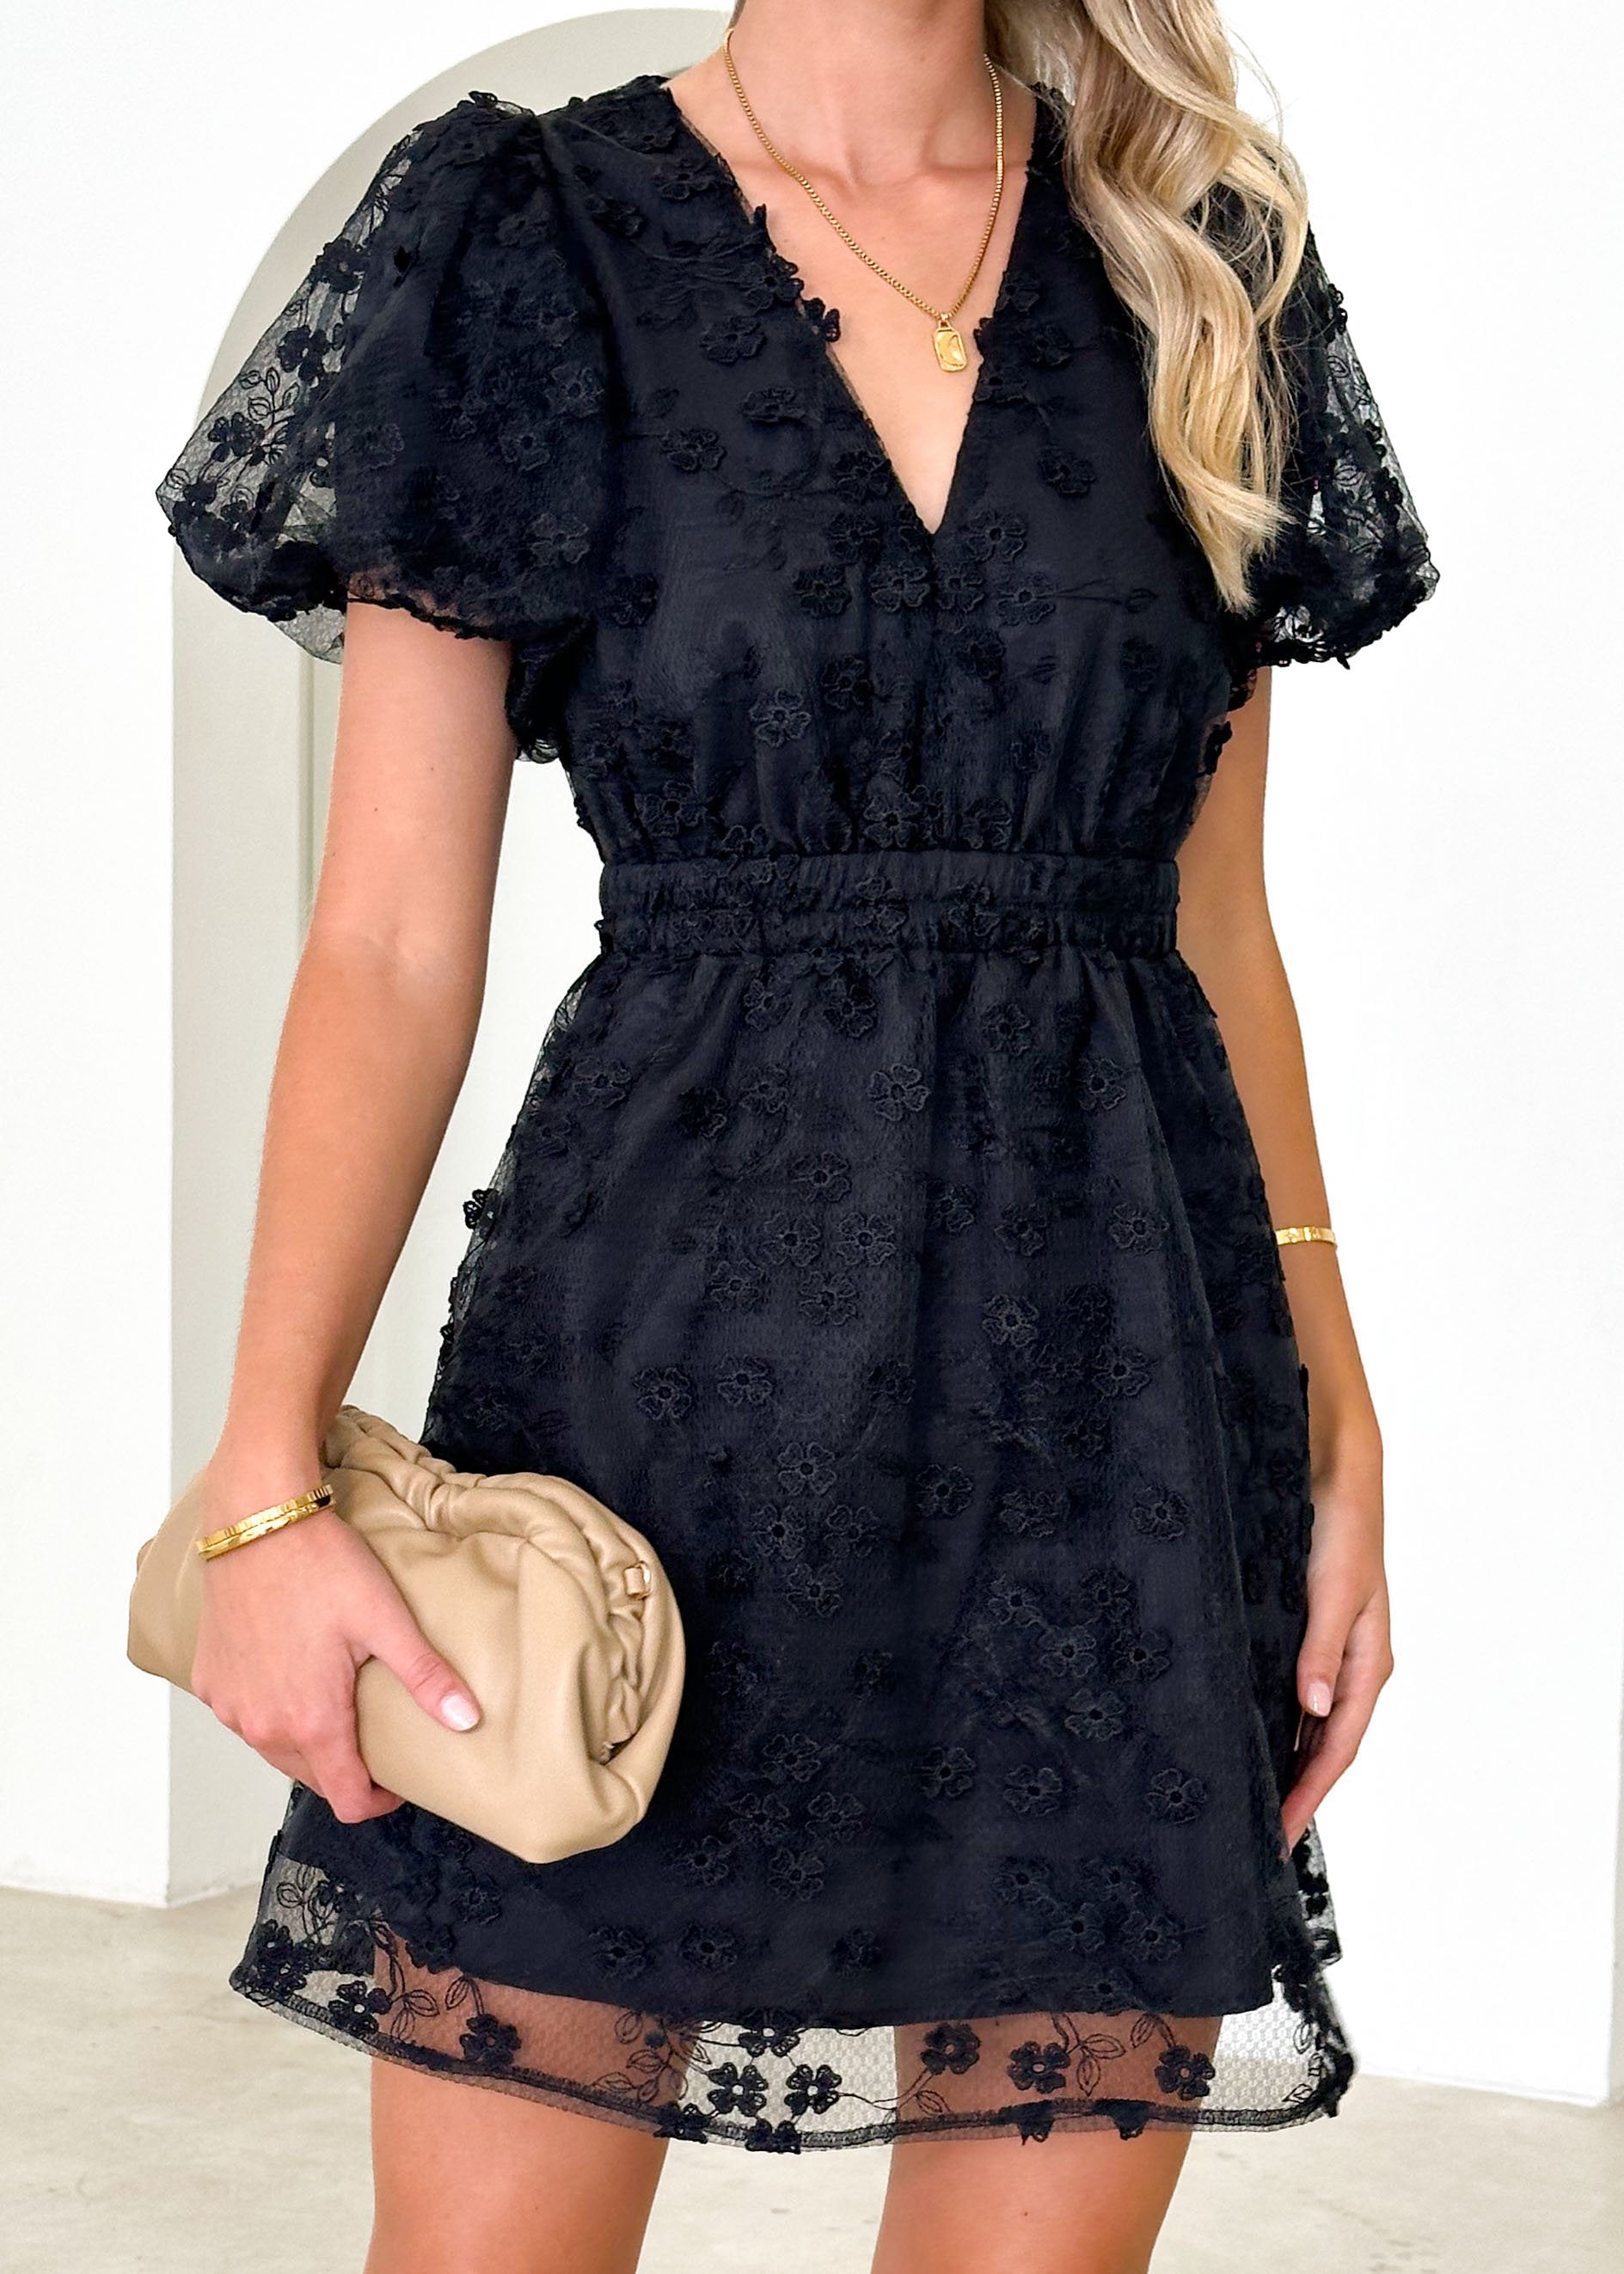 Yamela Dress - Black Embroidered